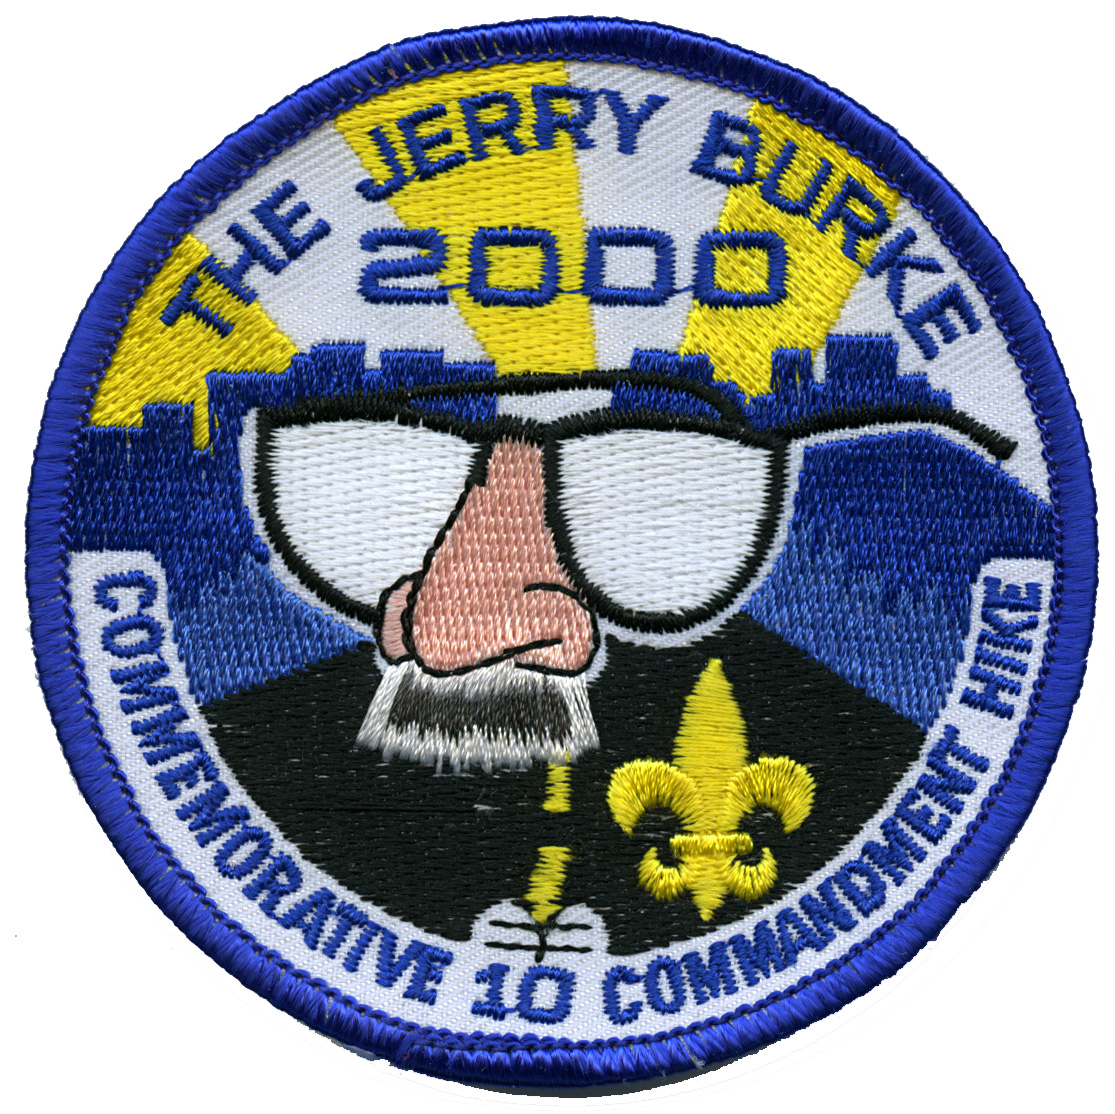 2000 Jerry Burke Hike patch